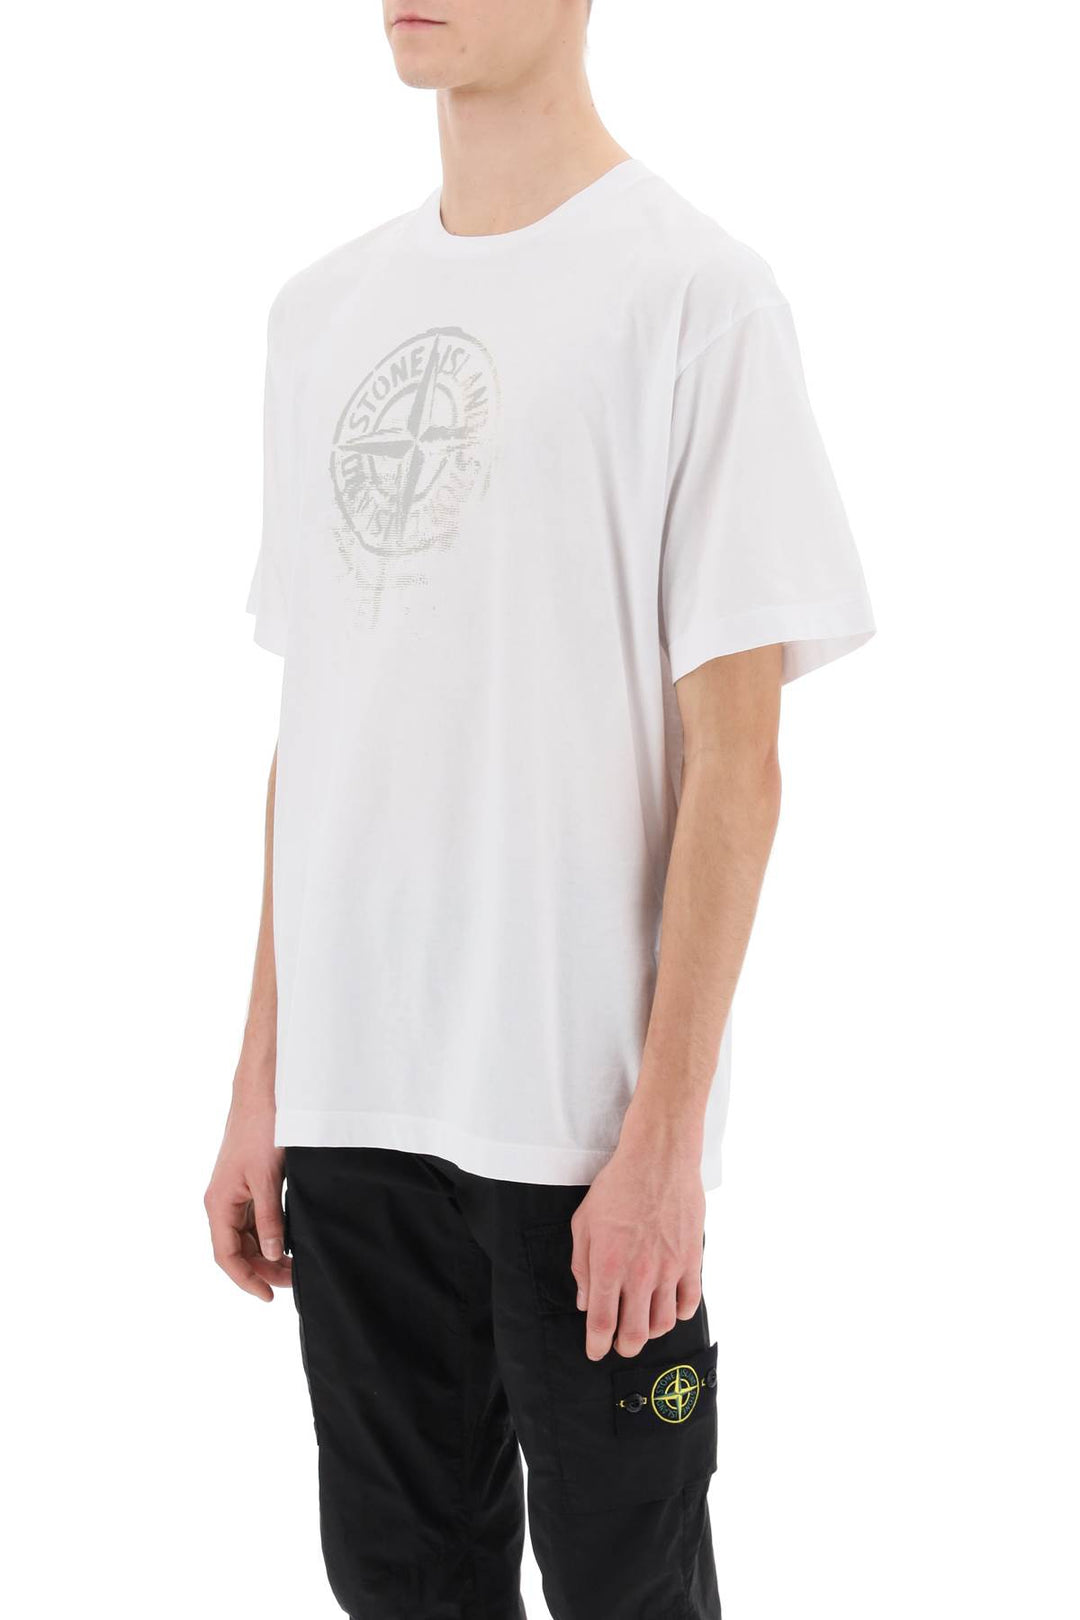 Stone Island T Shirt With Reflective Print   Bianco